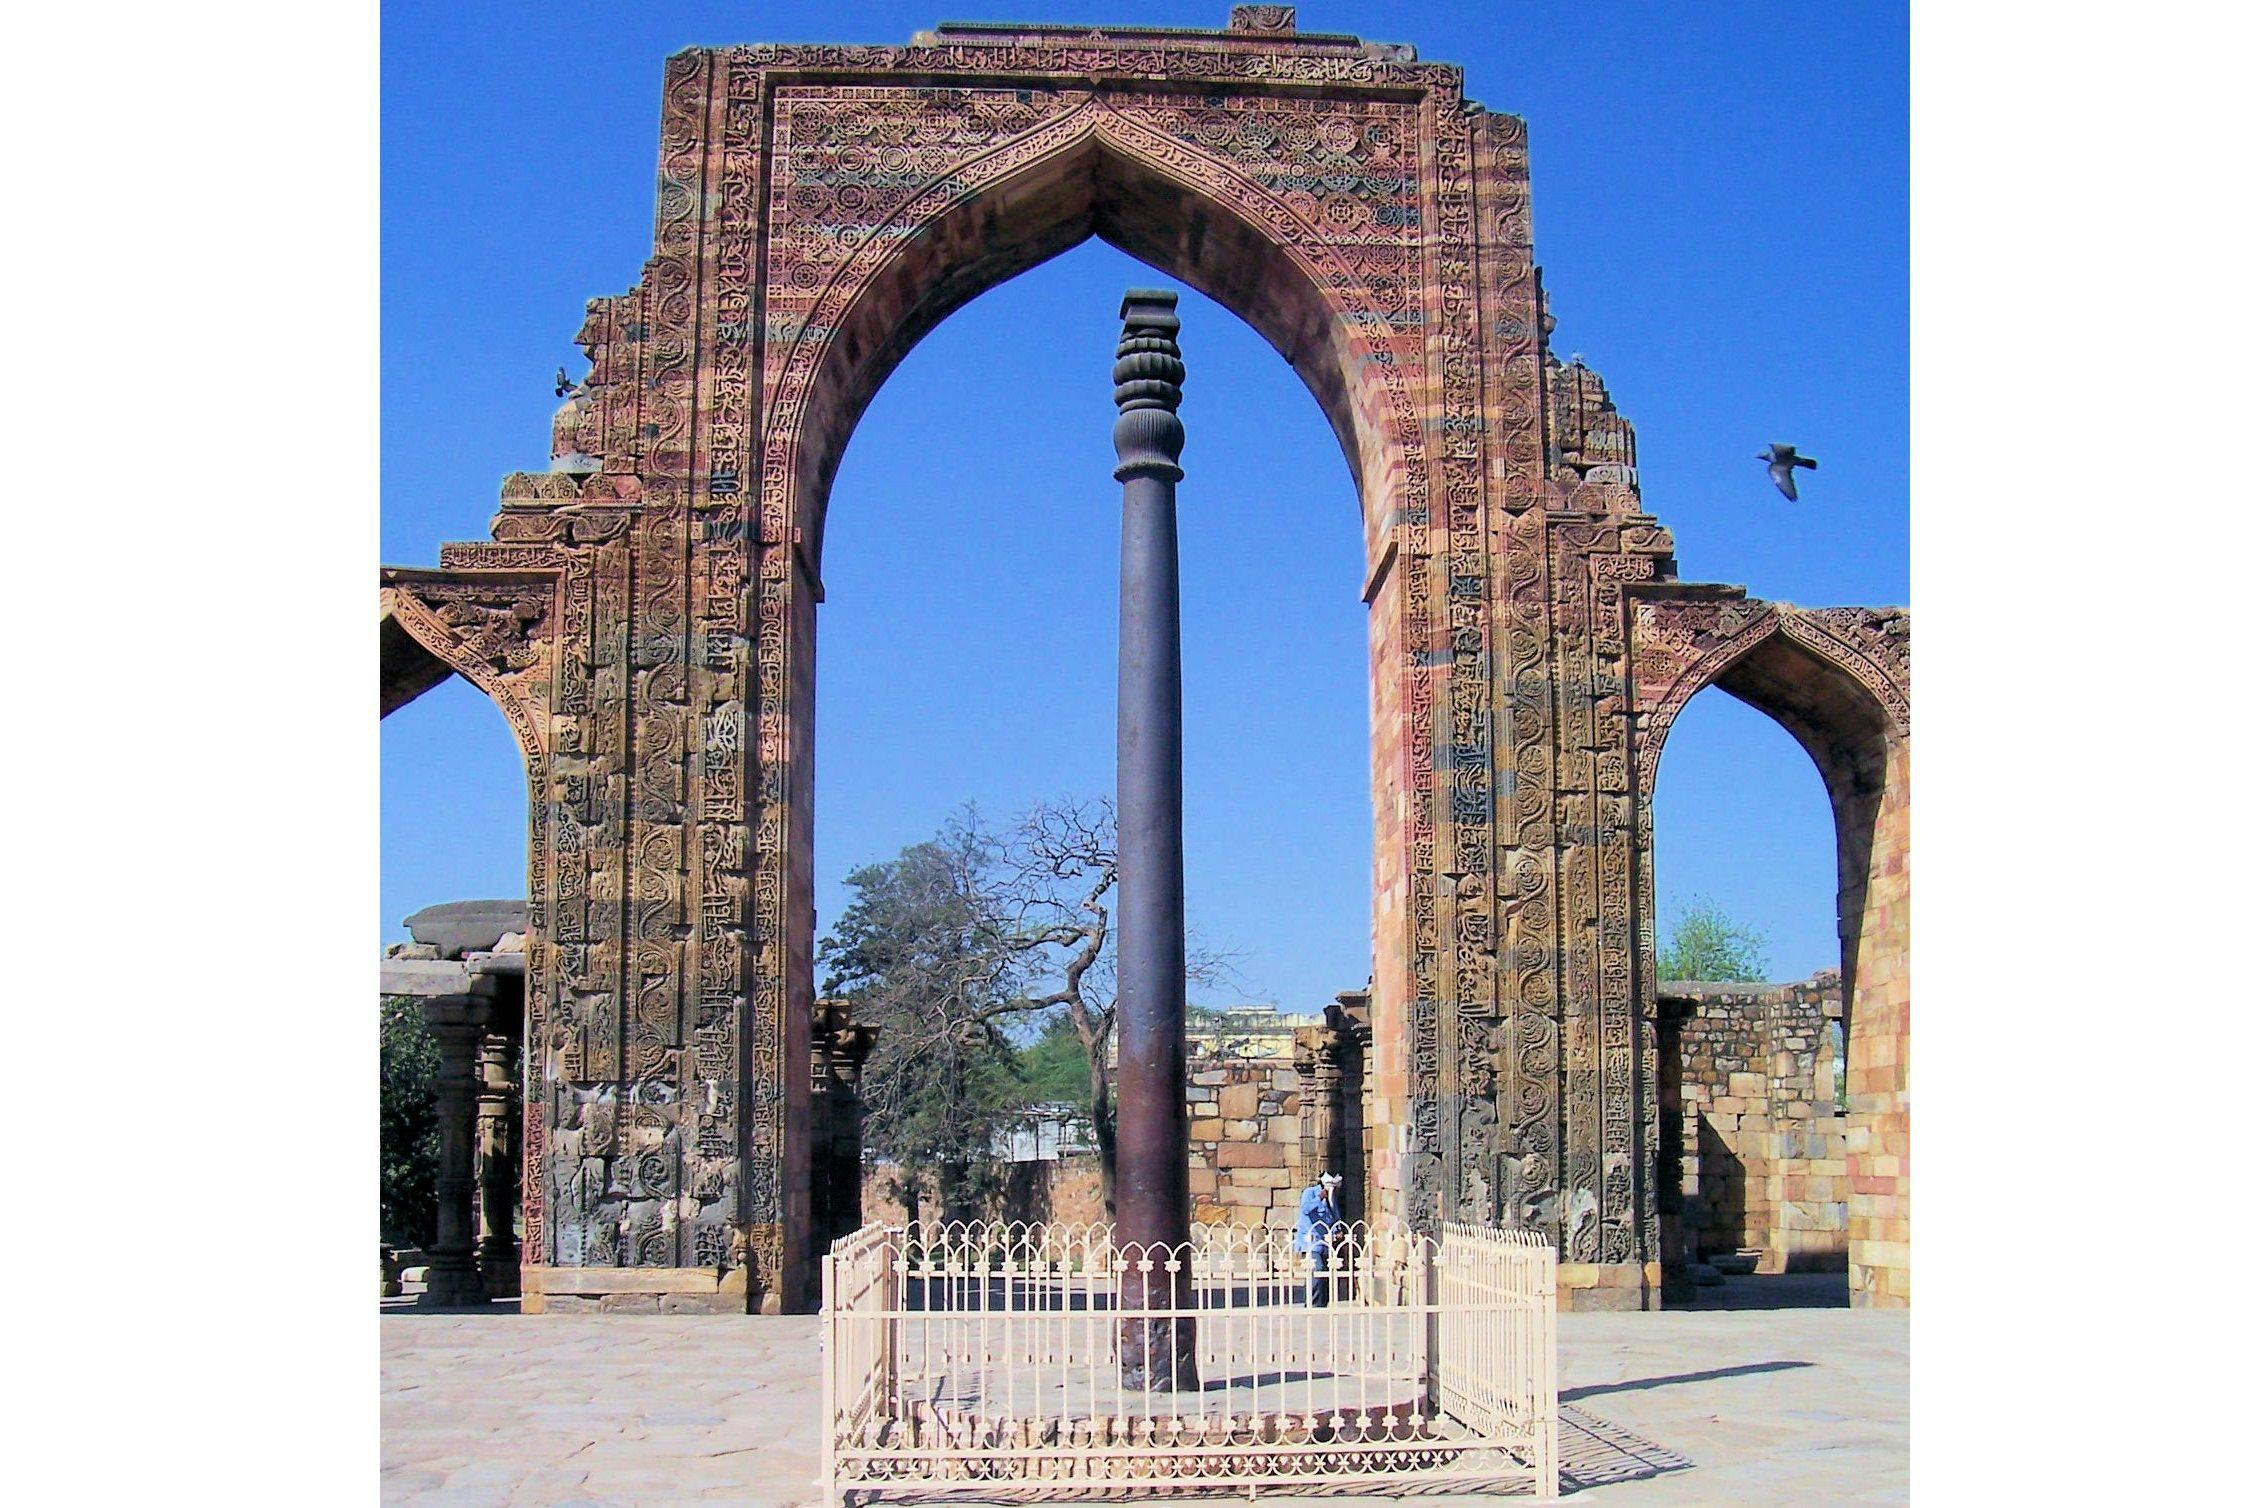 The Iron Pillar of Delhi in the Quwwat ul Islam Mosque